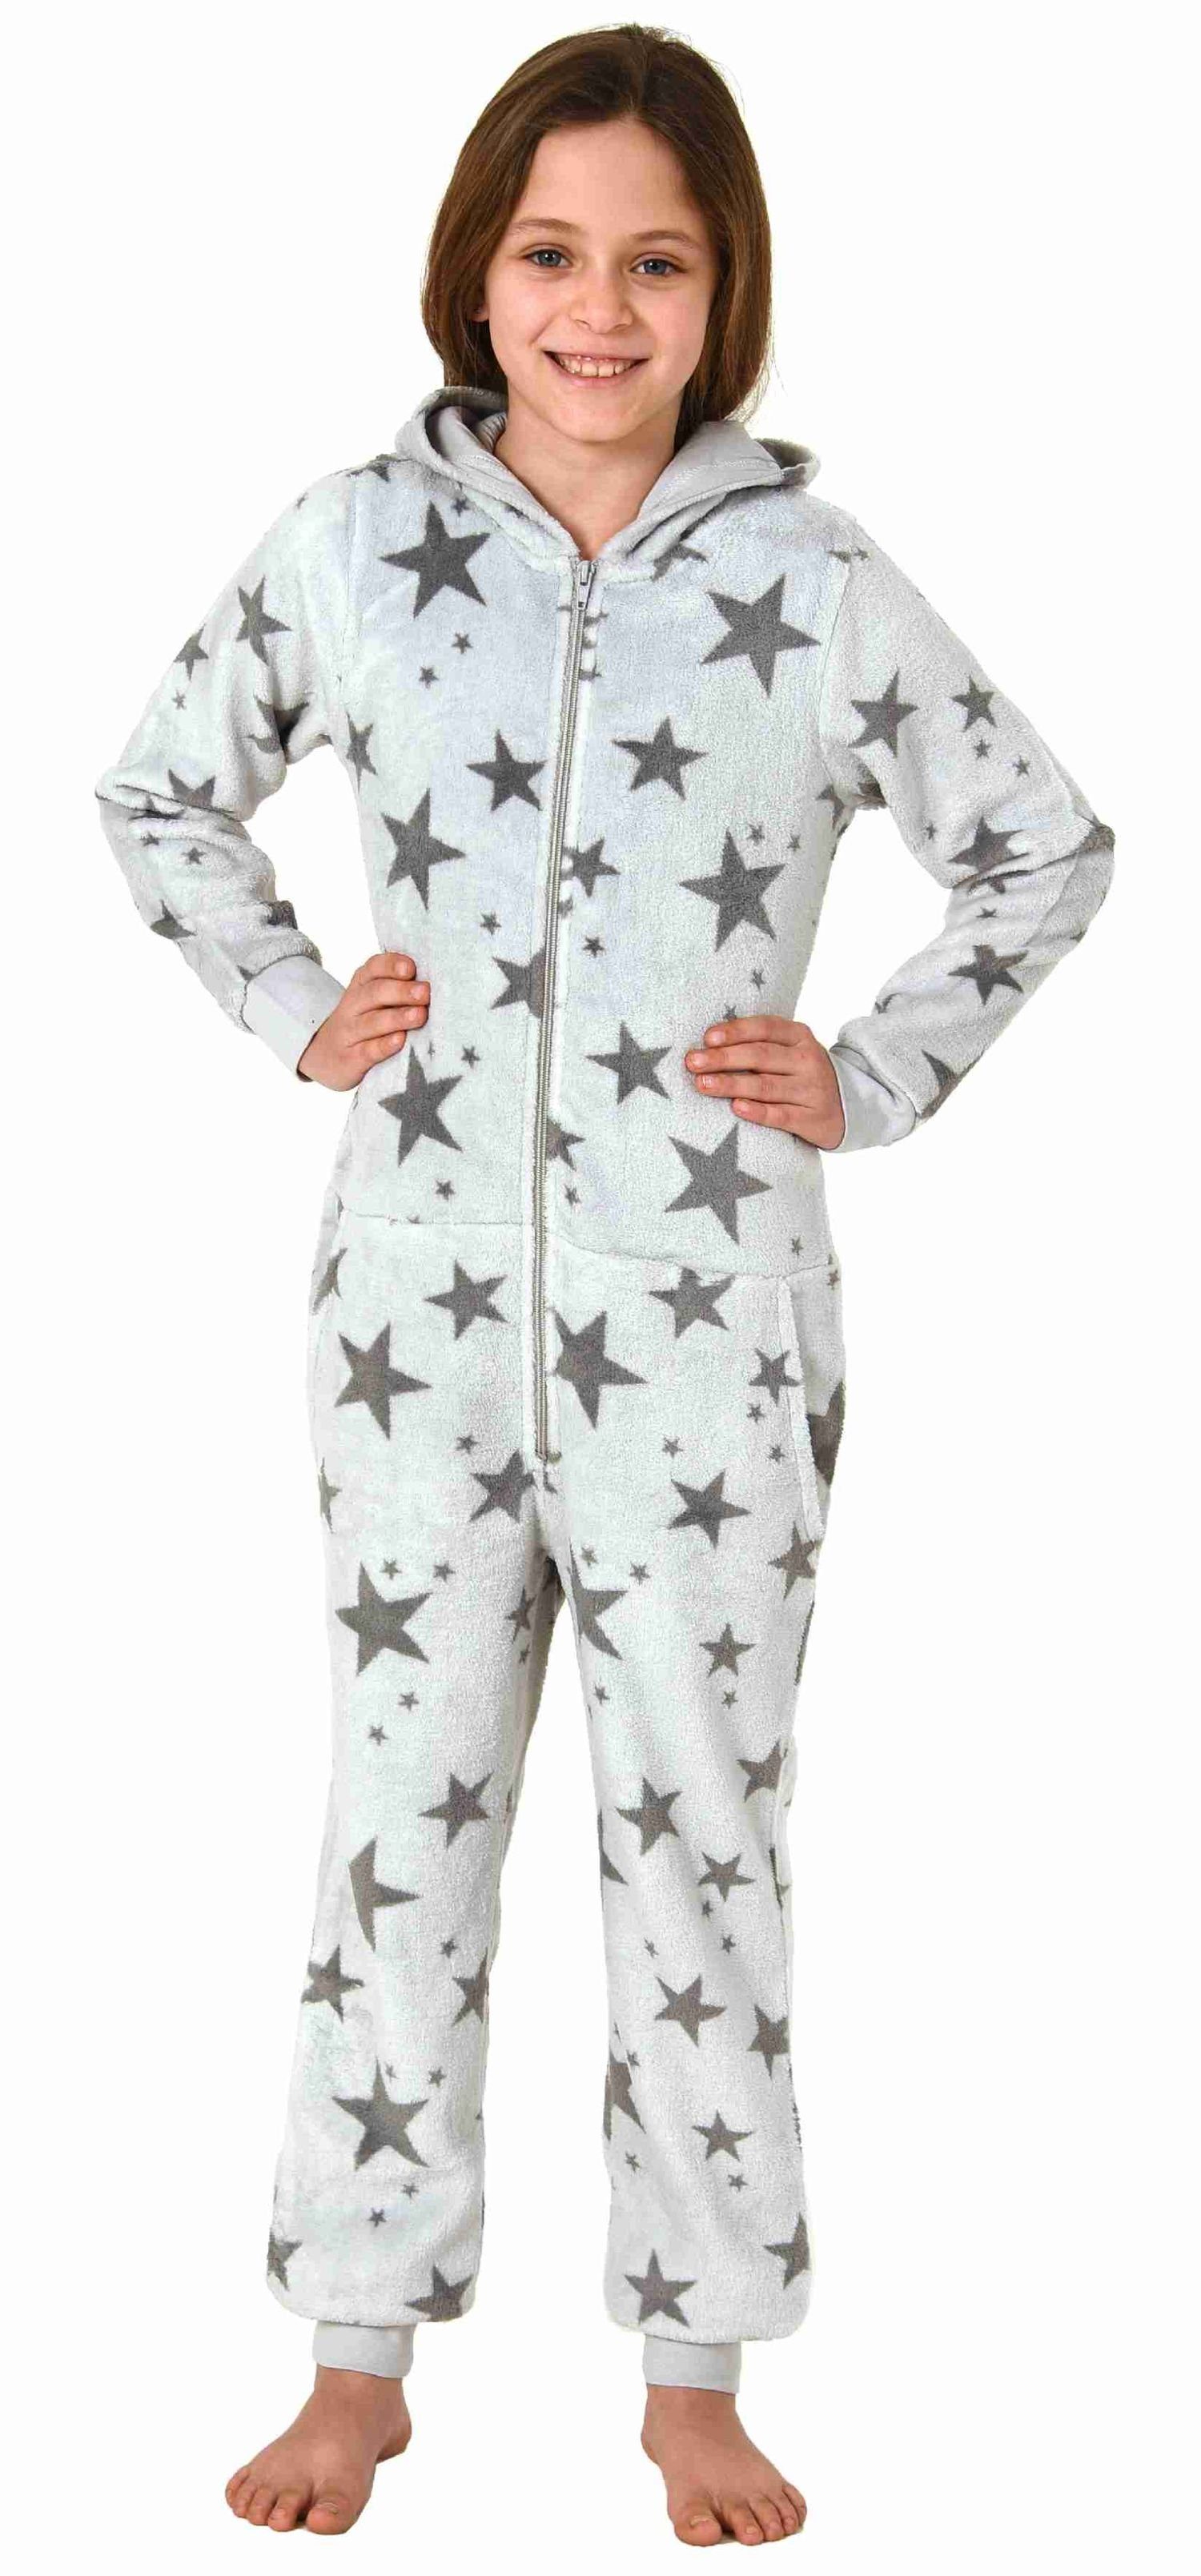 Normann Pyjama Mädchen Jumpsuit Overall Schlafanzug langarm in Sterne Optik grau